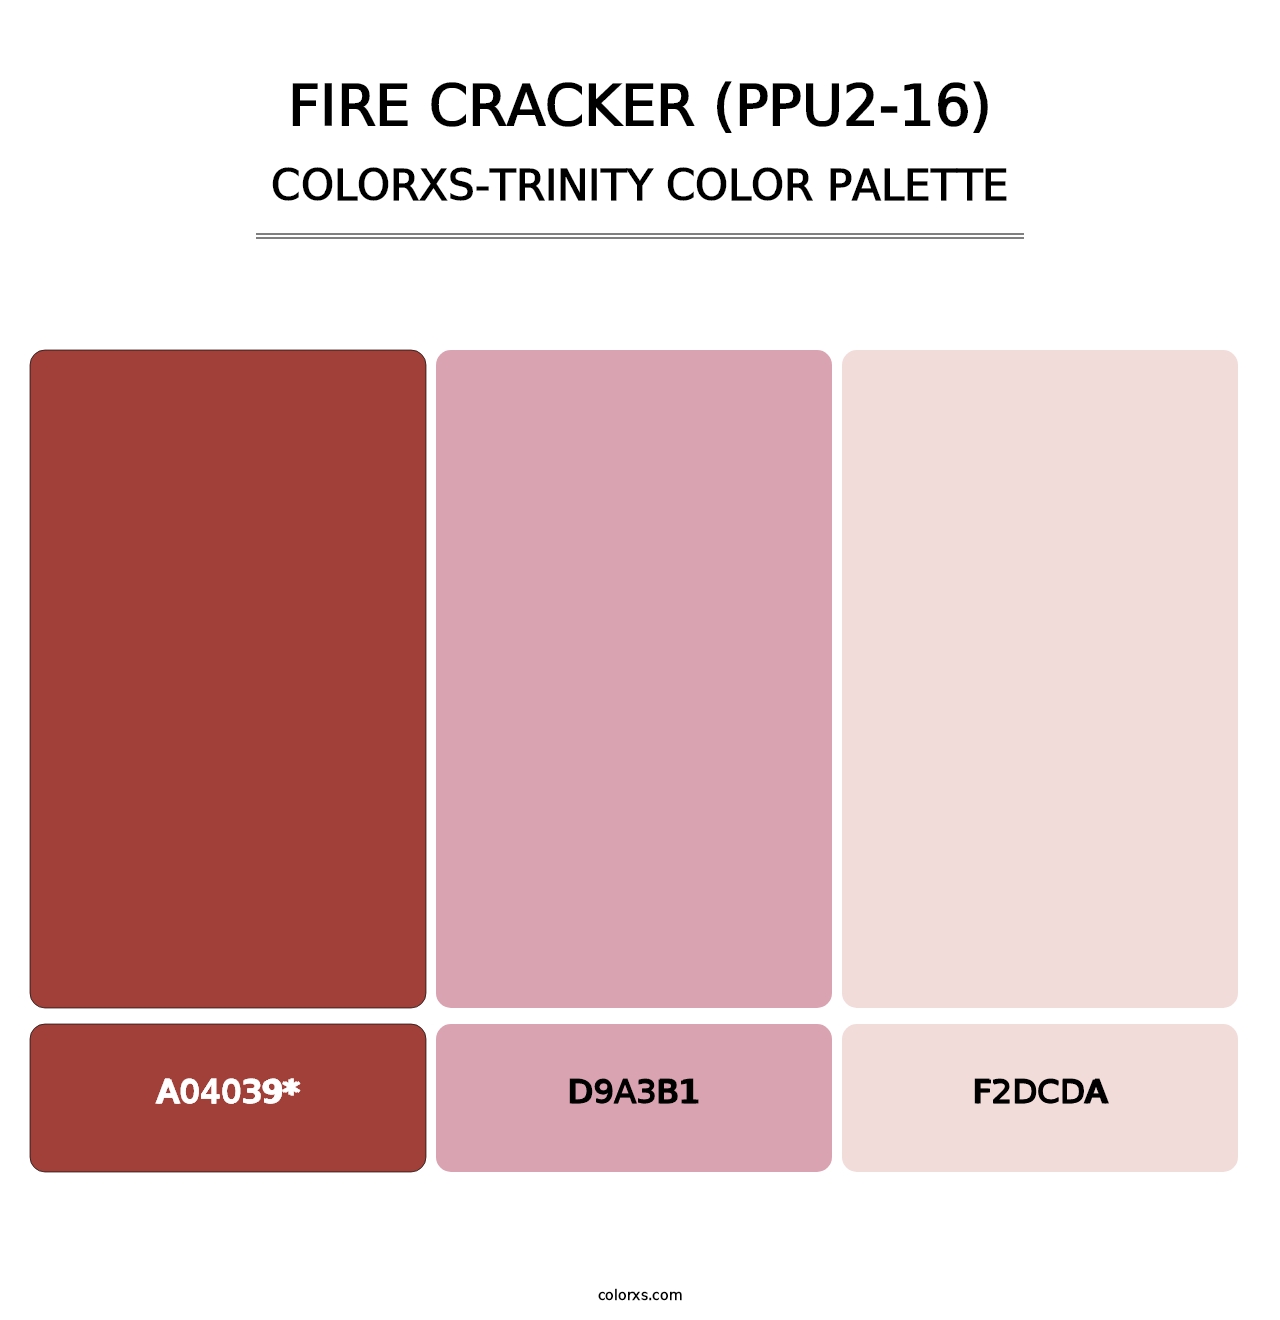 Fire Cracker (PPU2-16) - Colorxs Trinity Palette